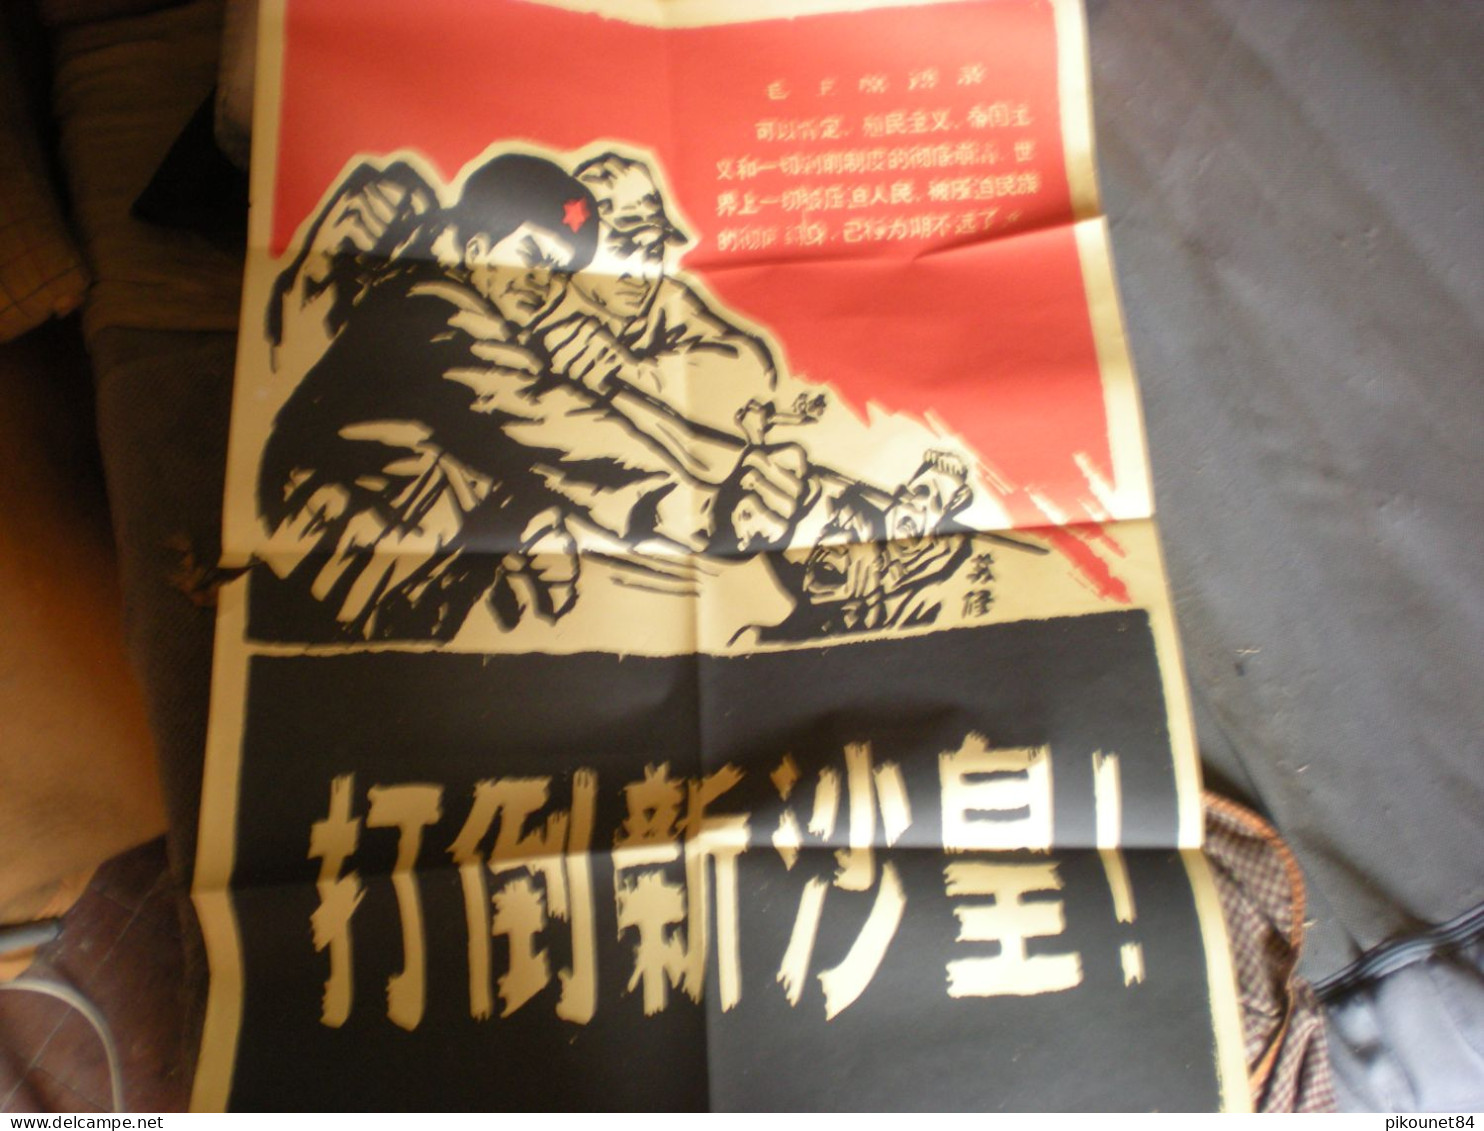 Affiche Originale Propagande Mao Années 60 - Posters